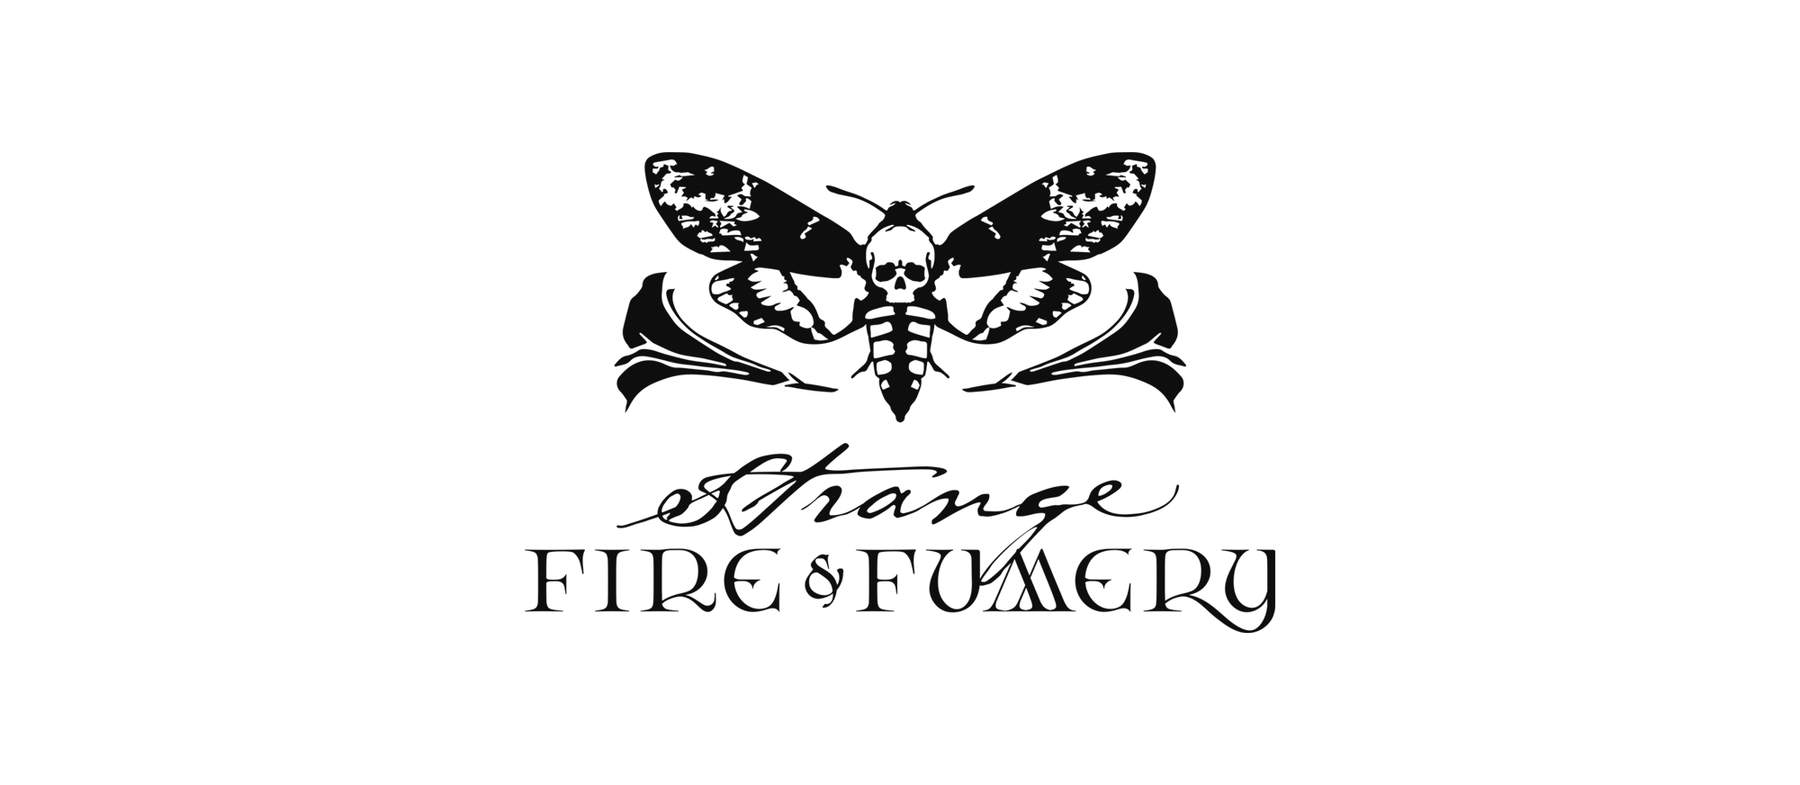 Strange Fire & Fumery